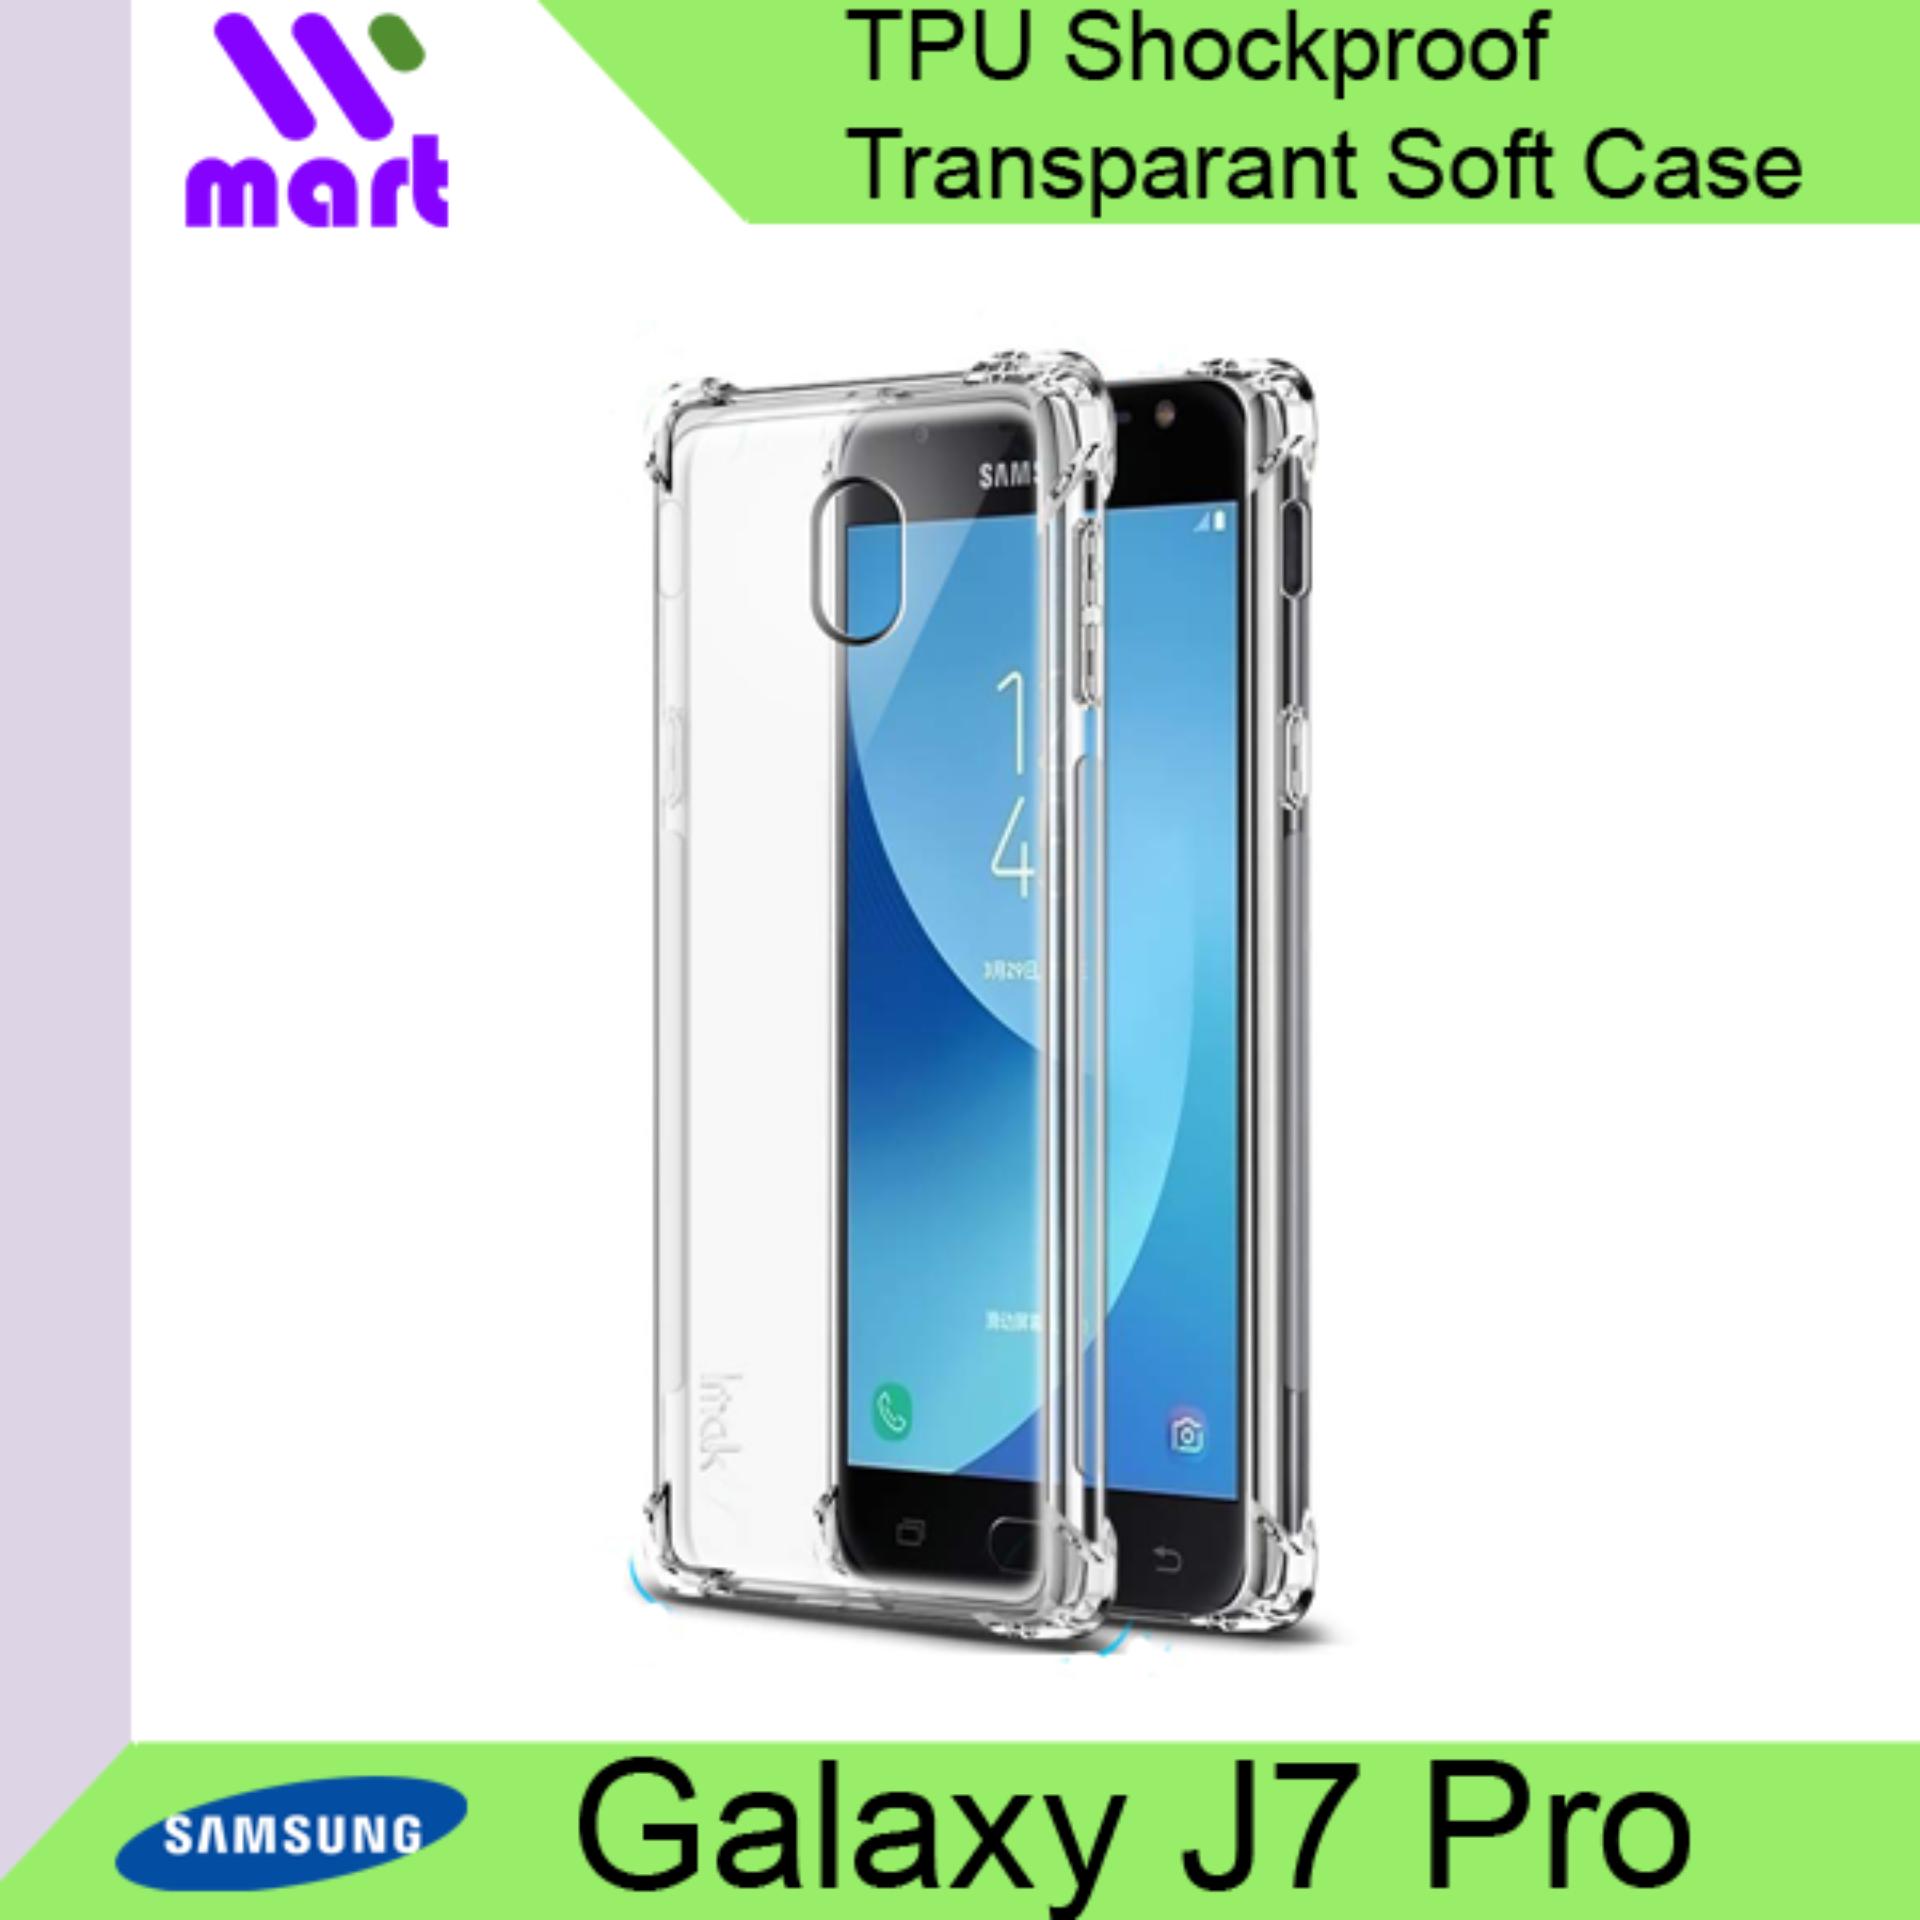 TPU Shockproof Transparent Soft Case For Samsung Galaxy J7 Pro